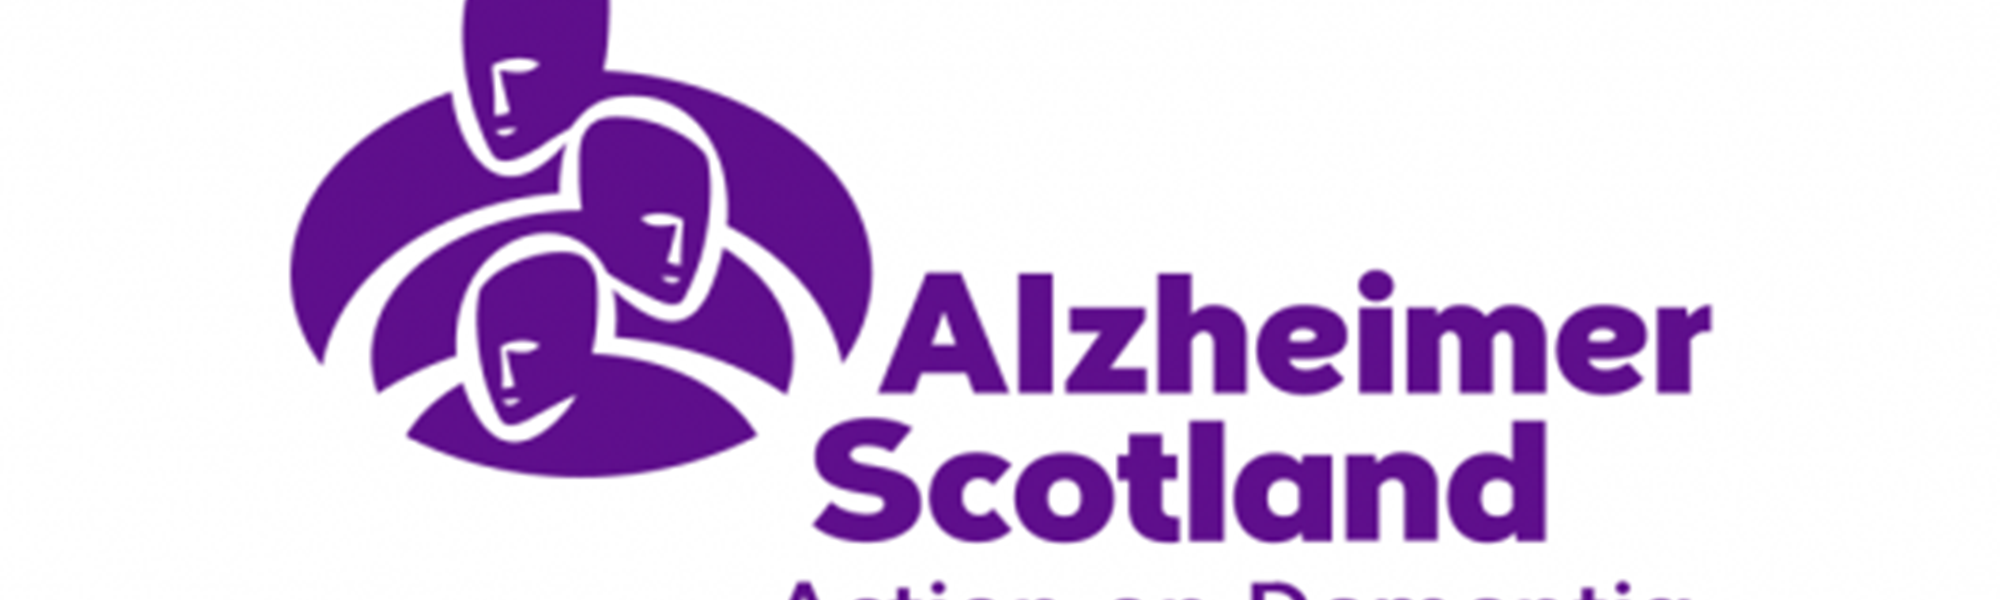 Background image: Society supports Alzheimer Scotland